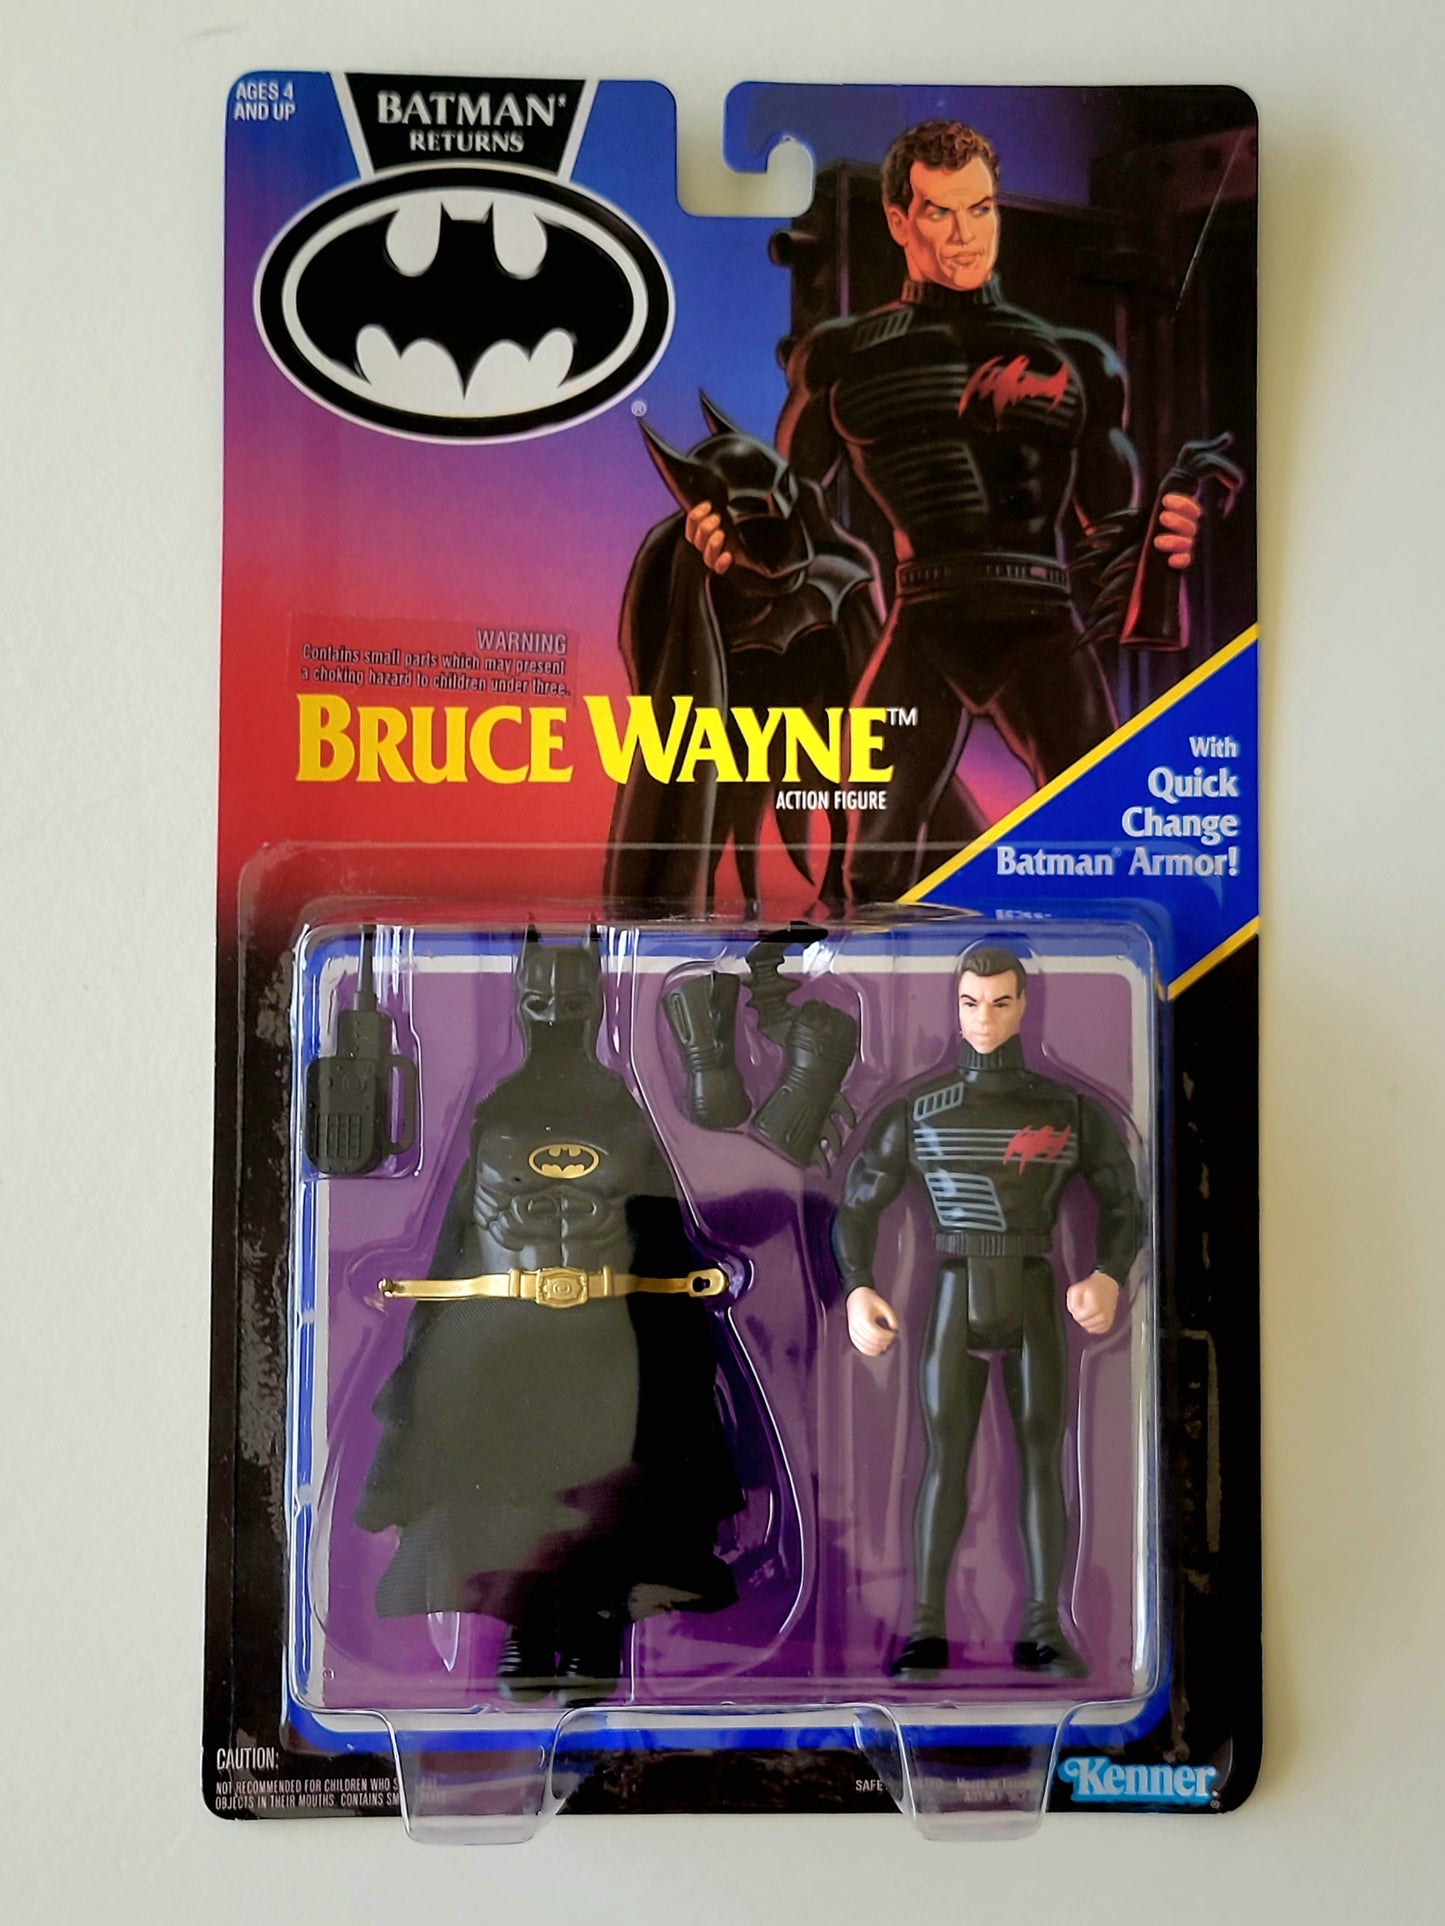 Bruce Wayne Action Figure from Batman Returns